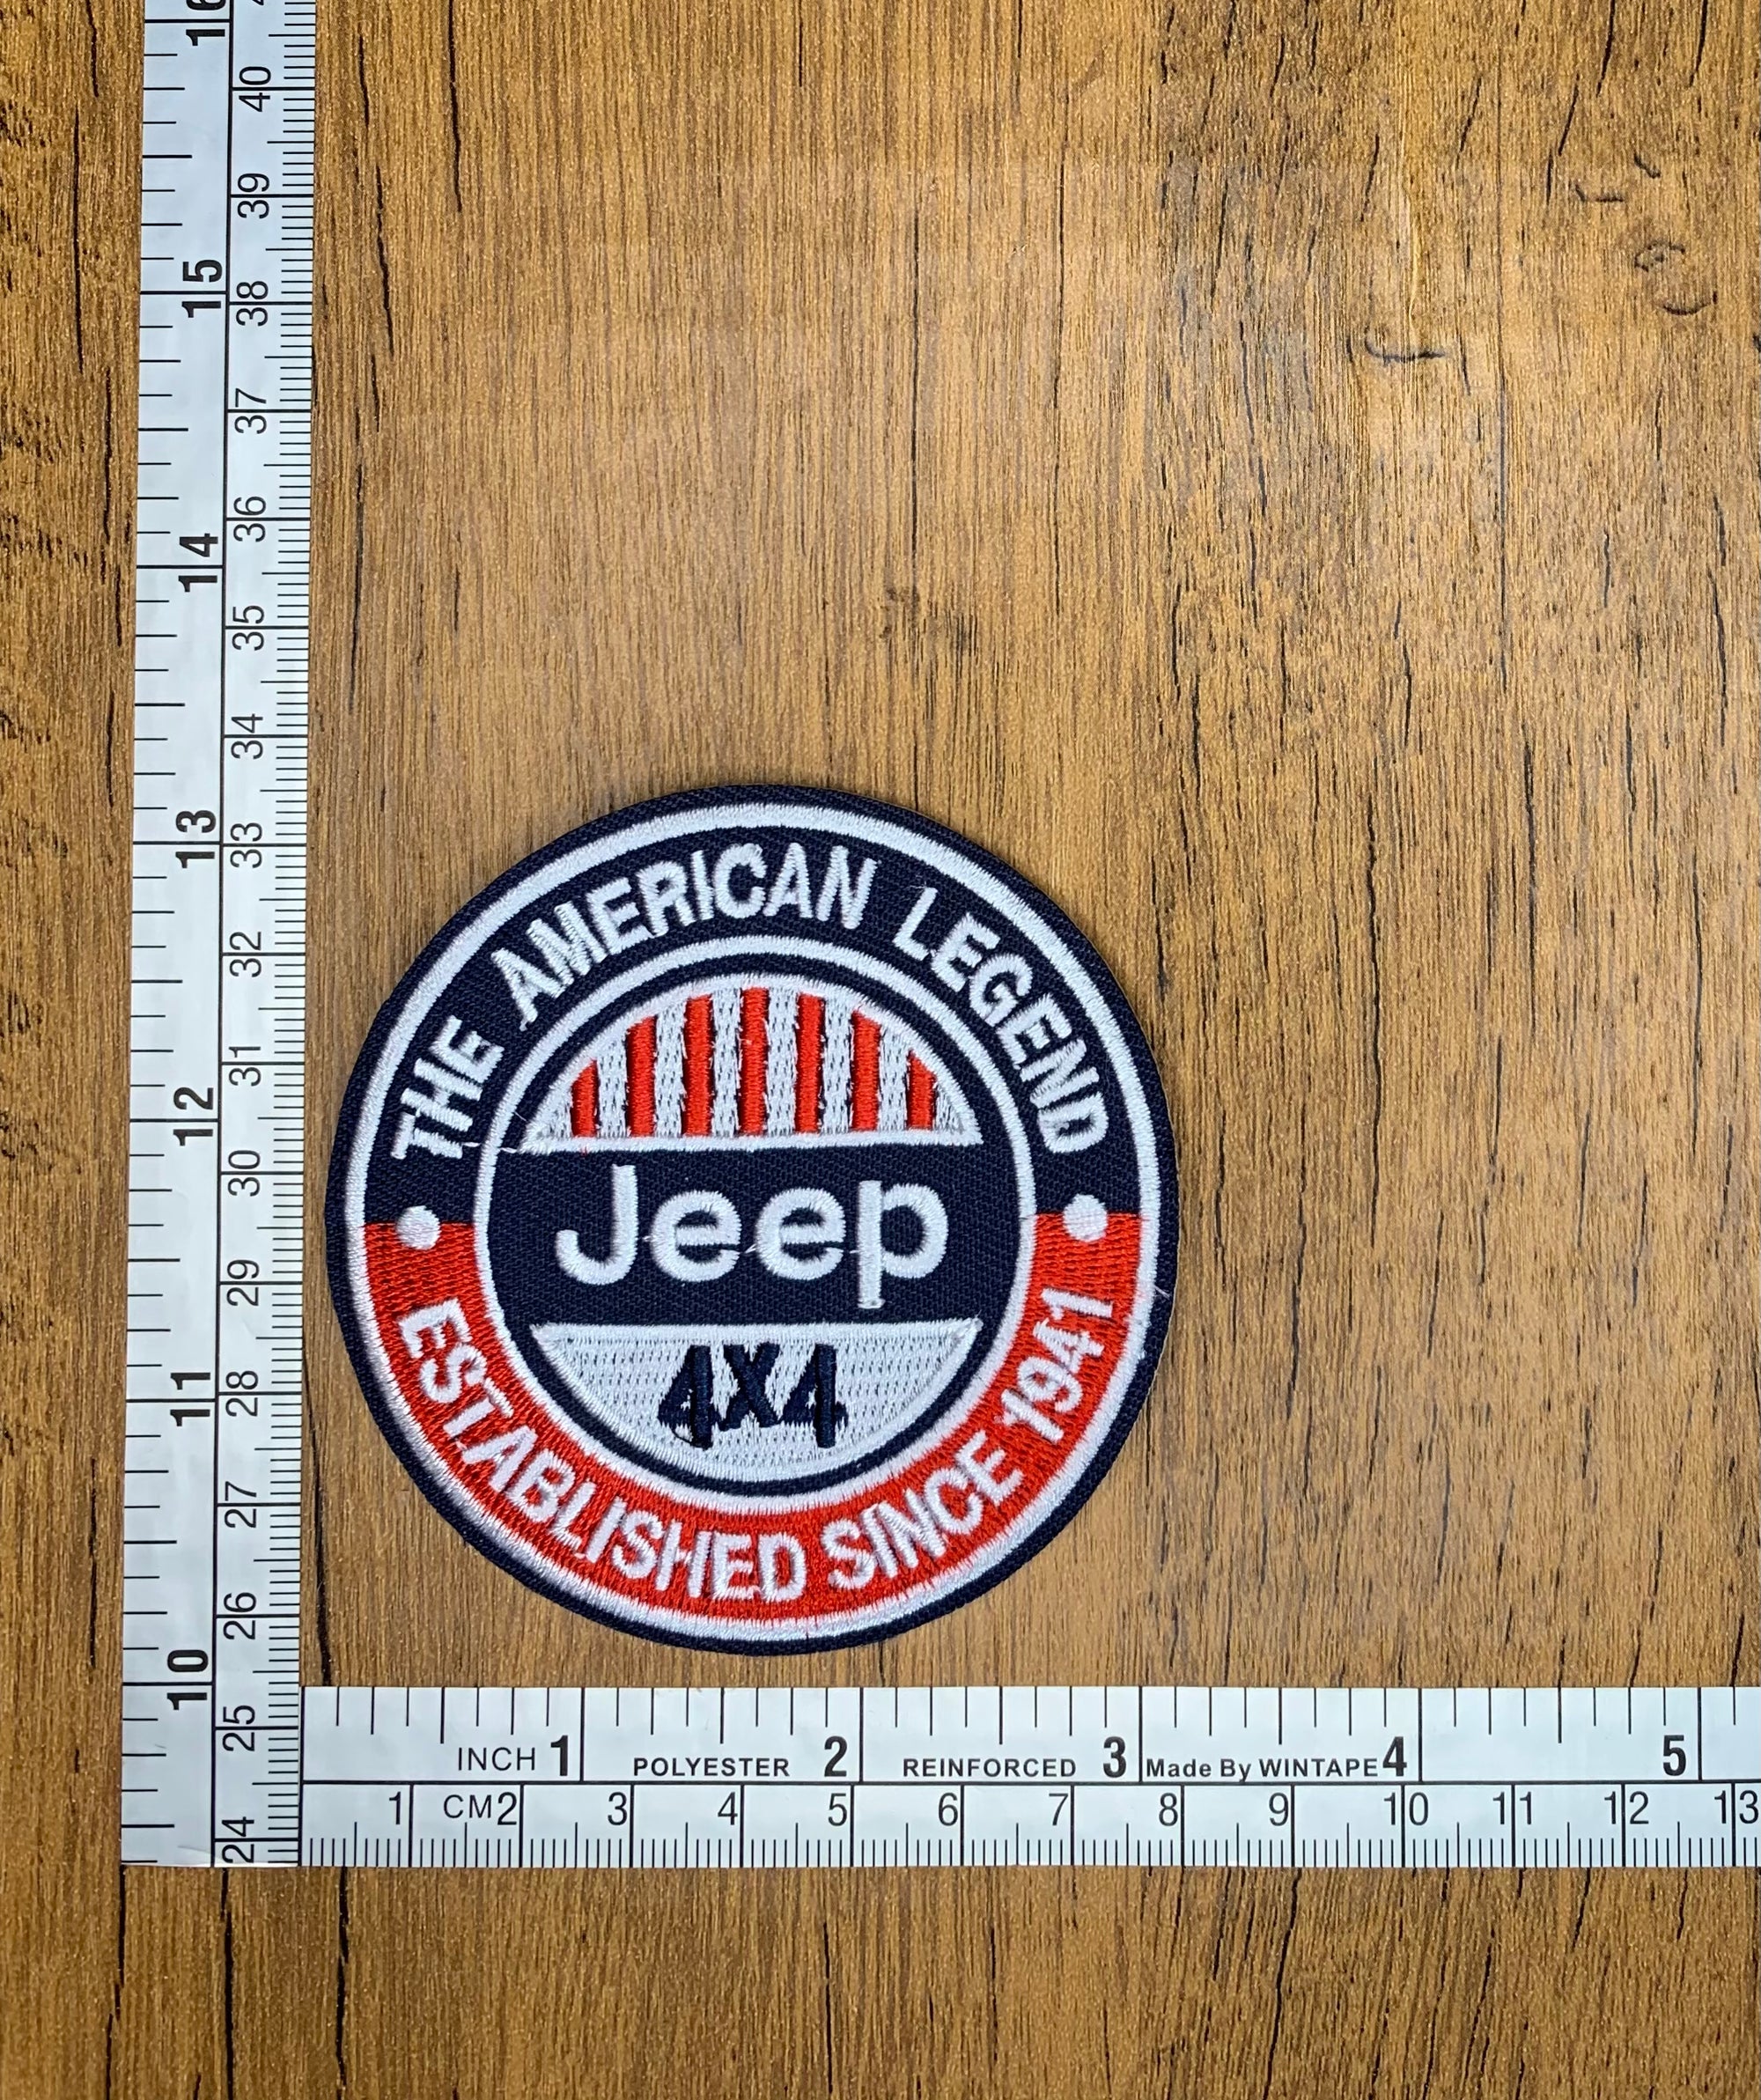 Jeep- The American Legend, Established Since 1941